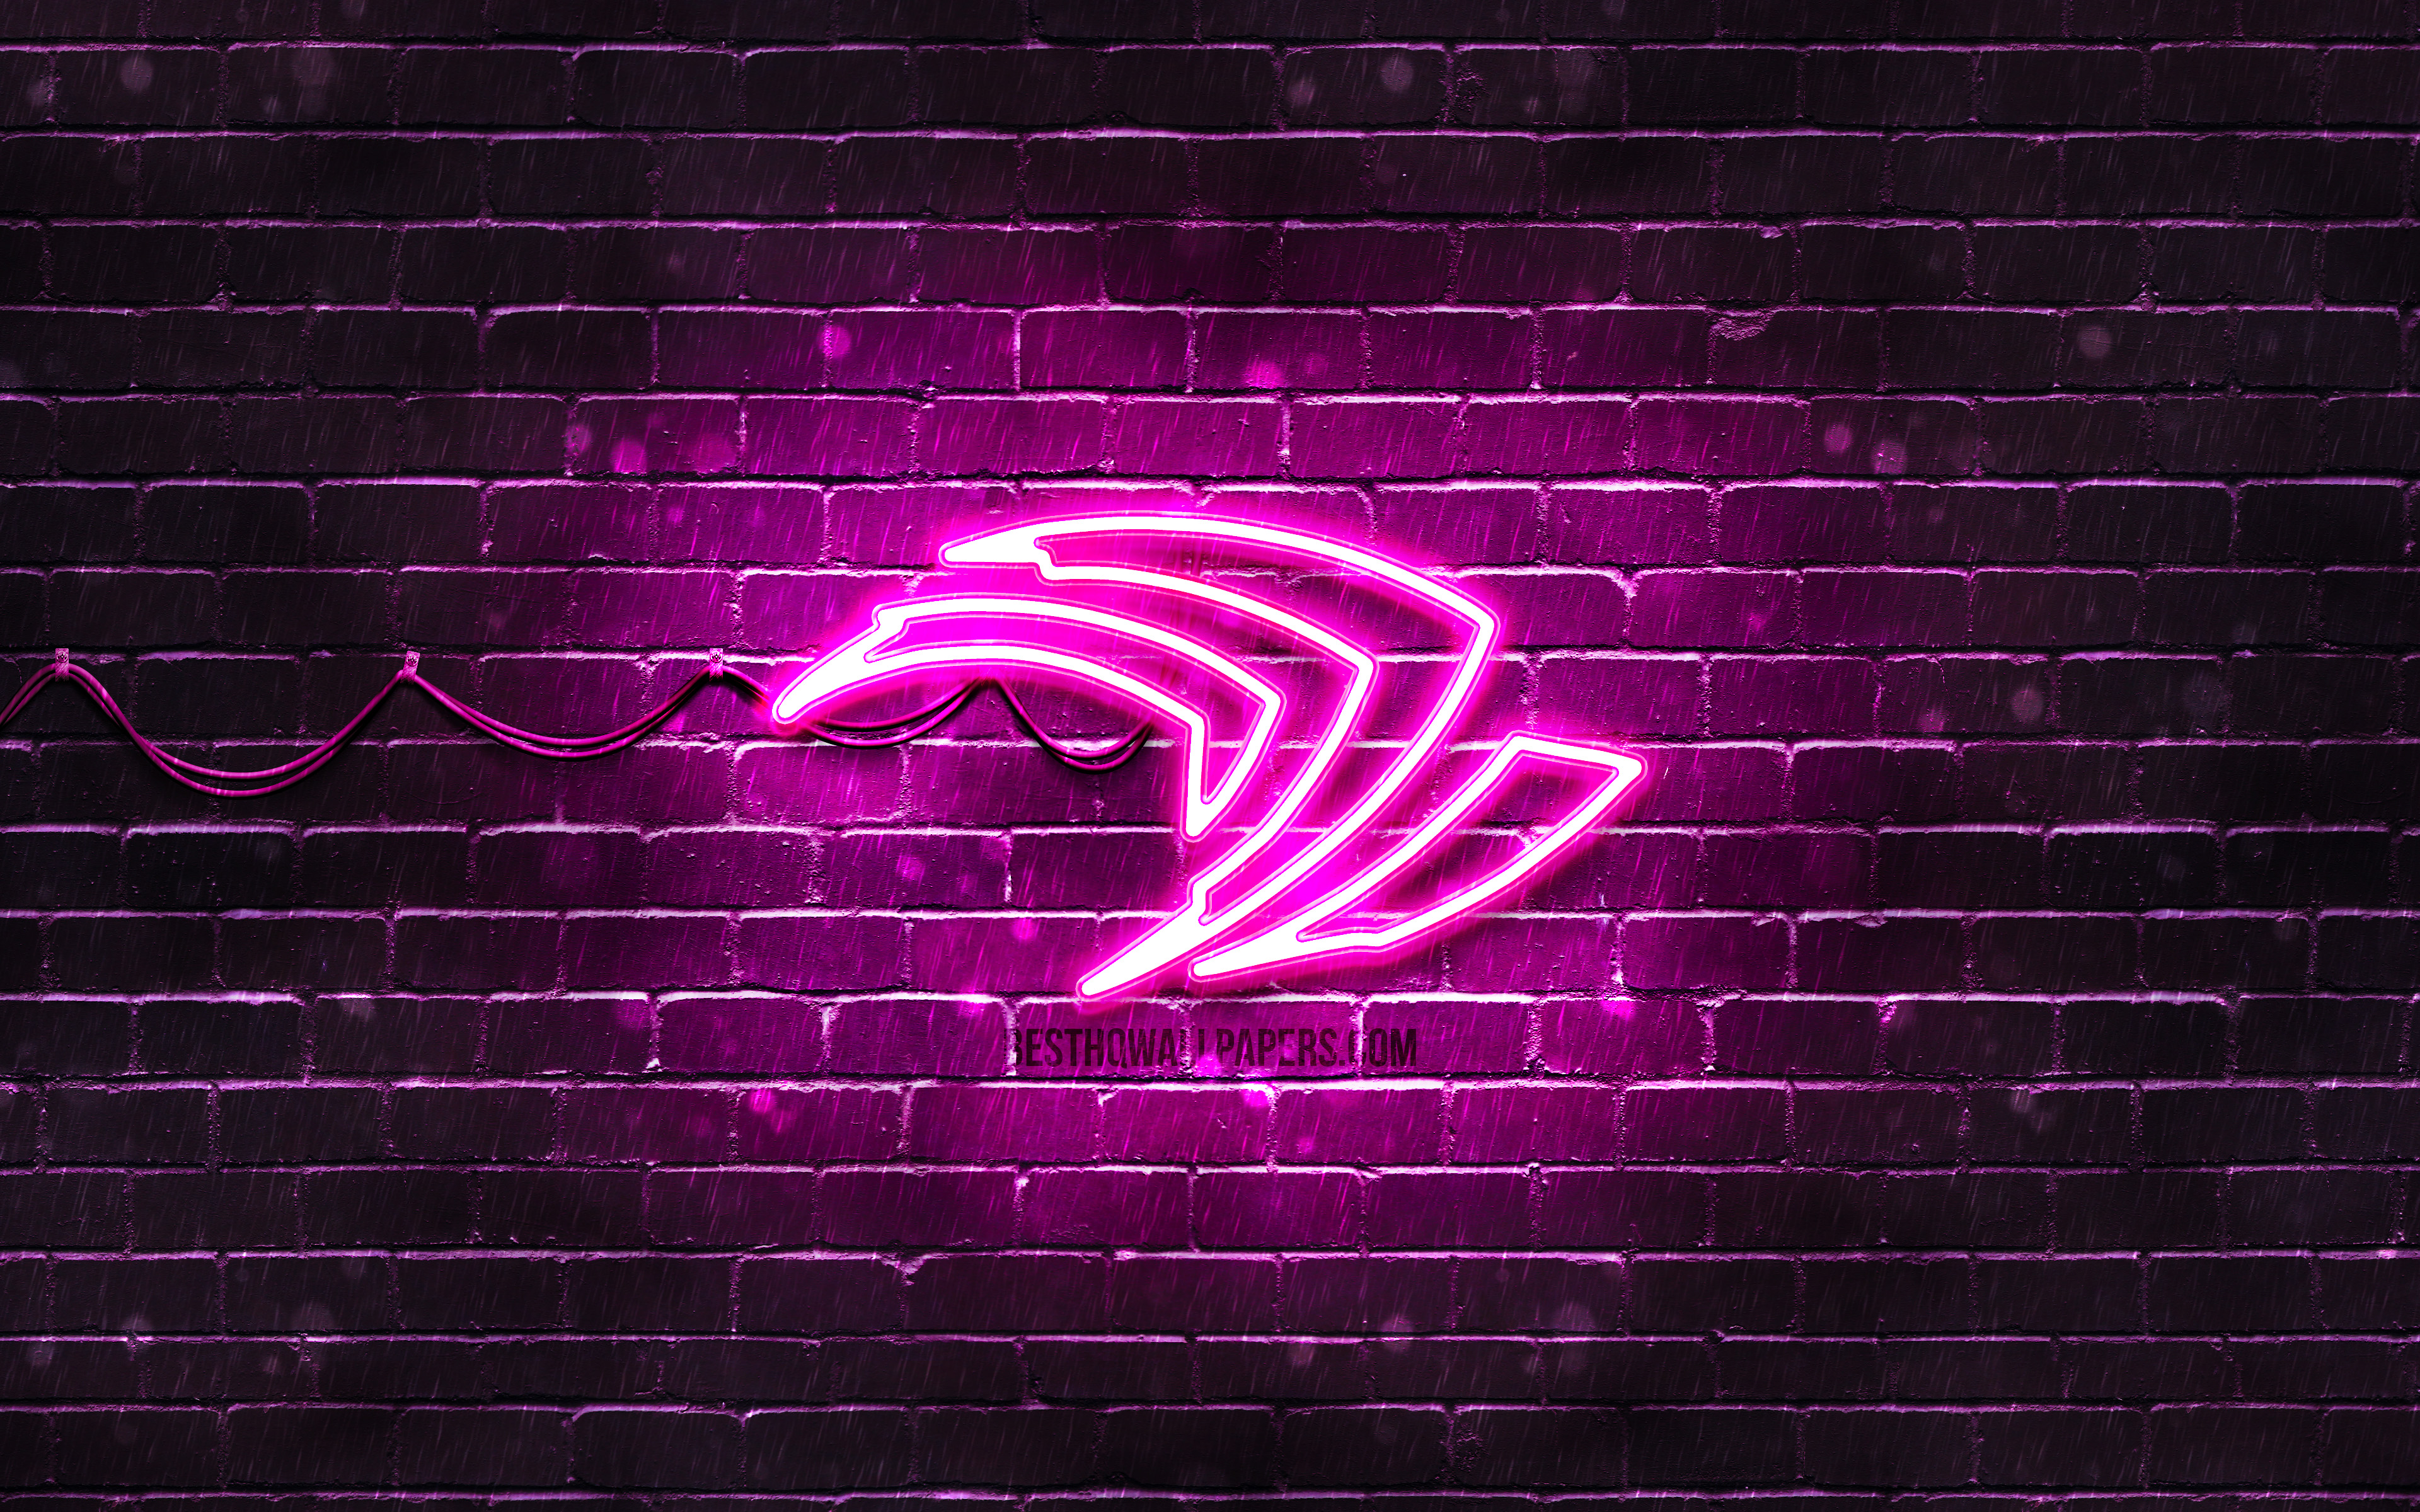 Download wallpaper Nvidia purple logo